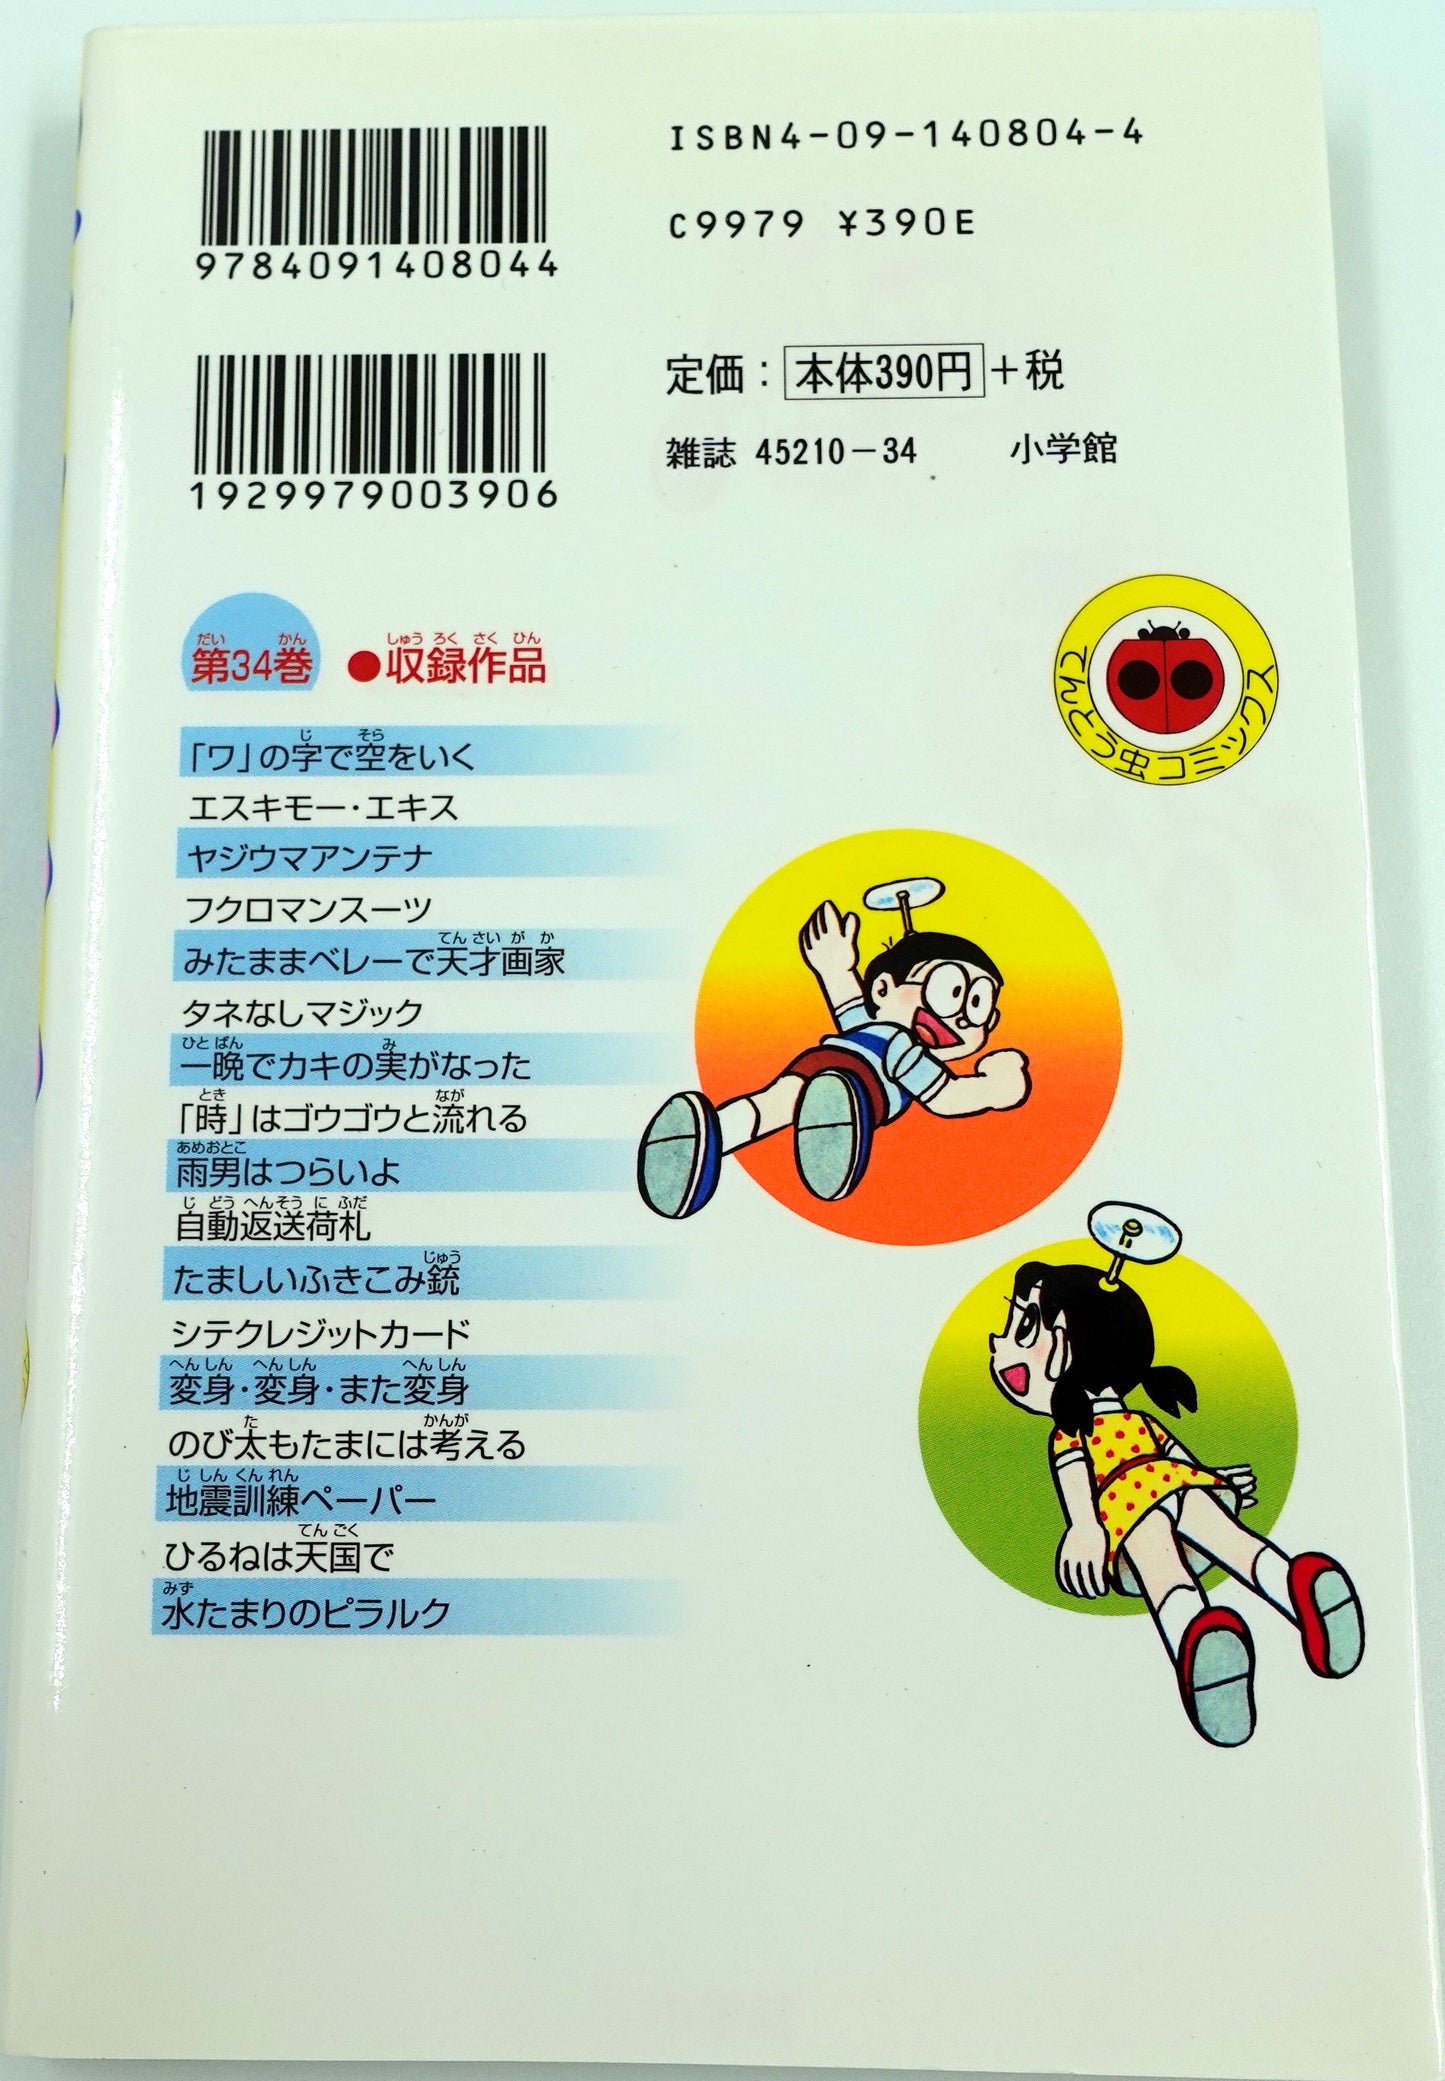 Doraemon Vol.34- Official Japanese Edition